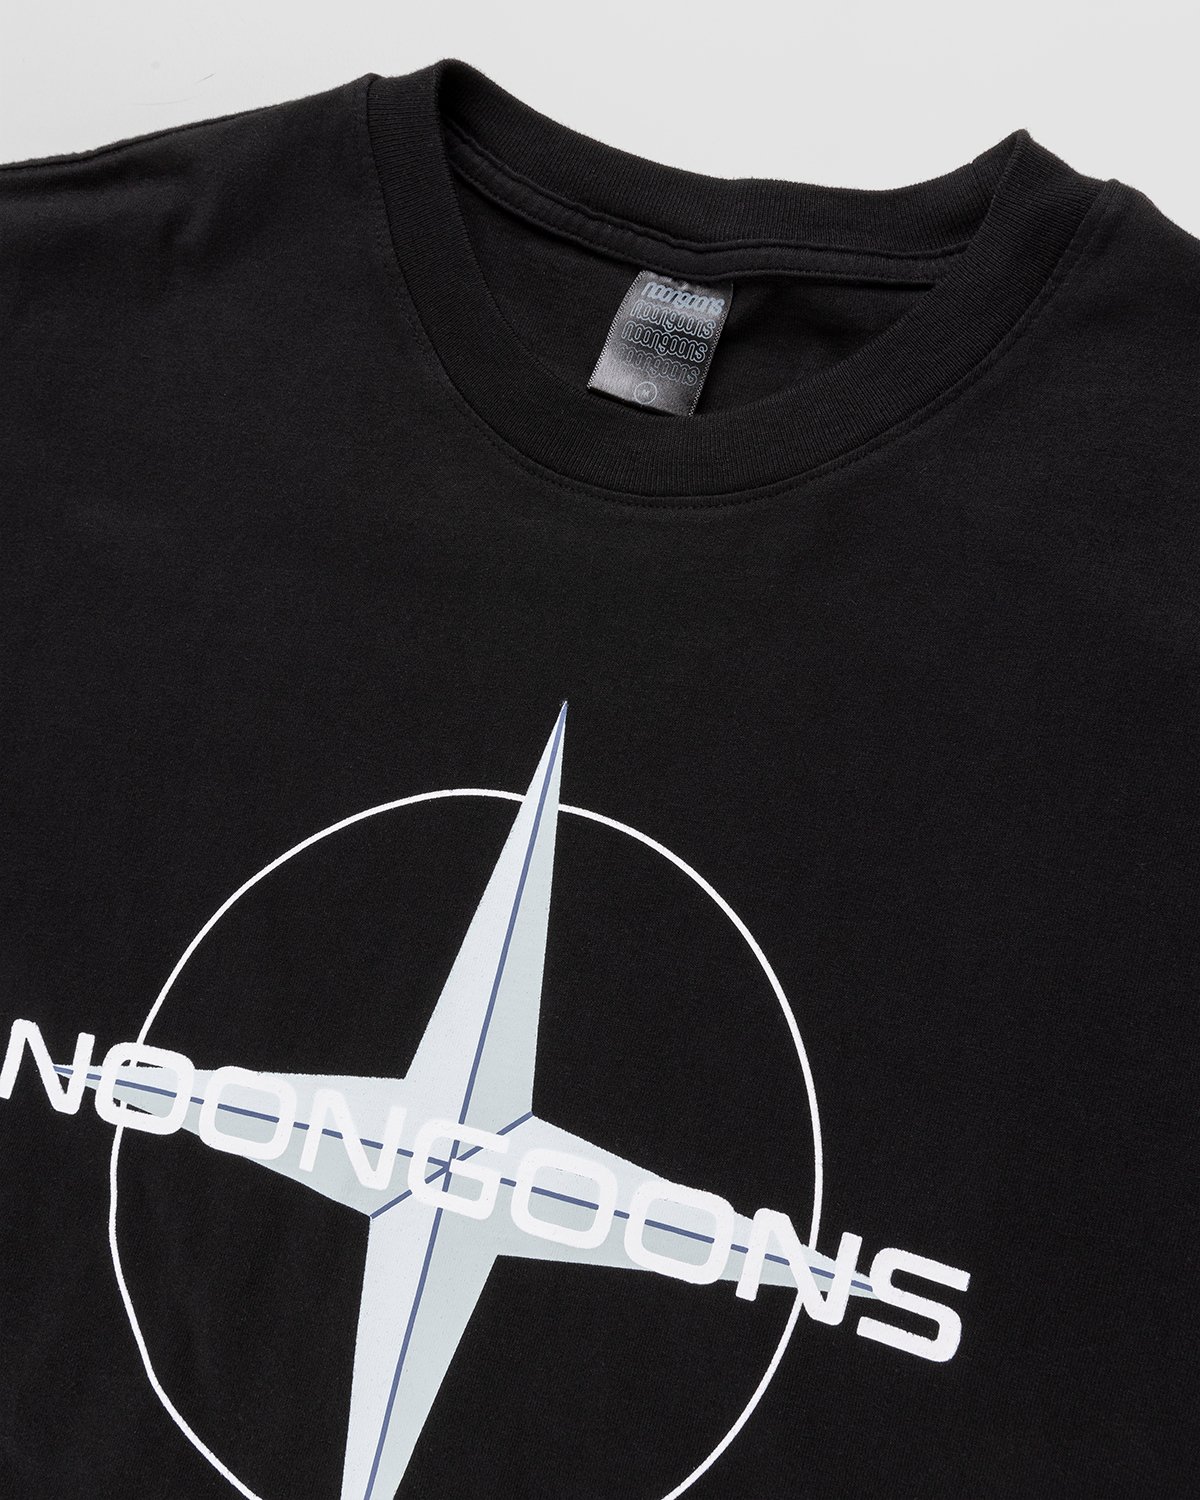 Noon Goons - Compass Tshirt Black - Clothing - Black - Image 4